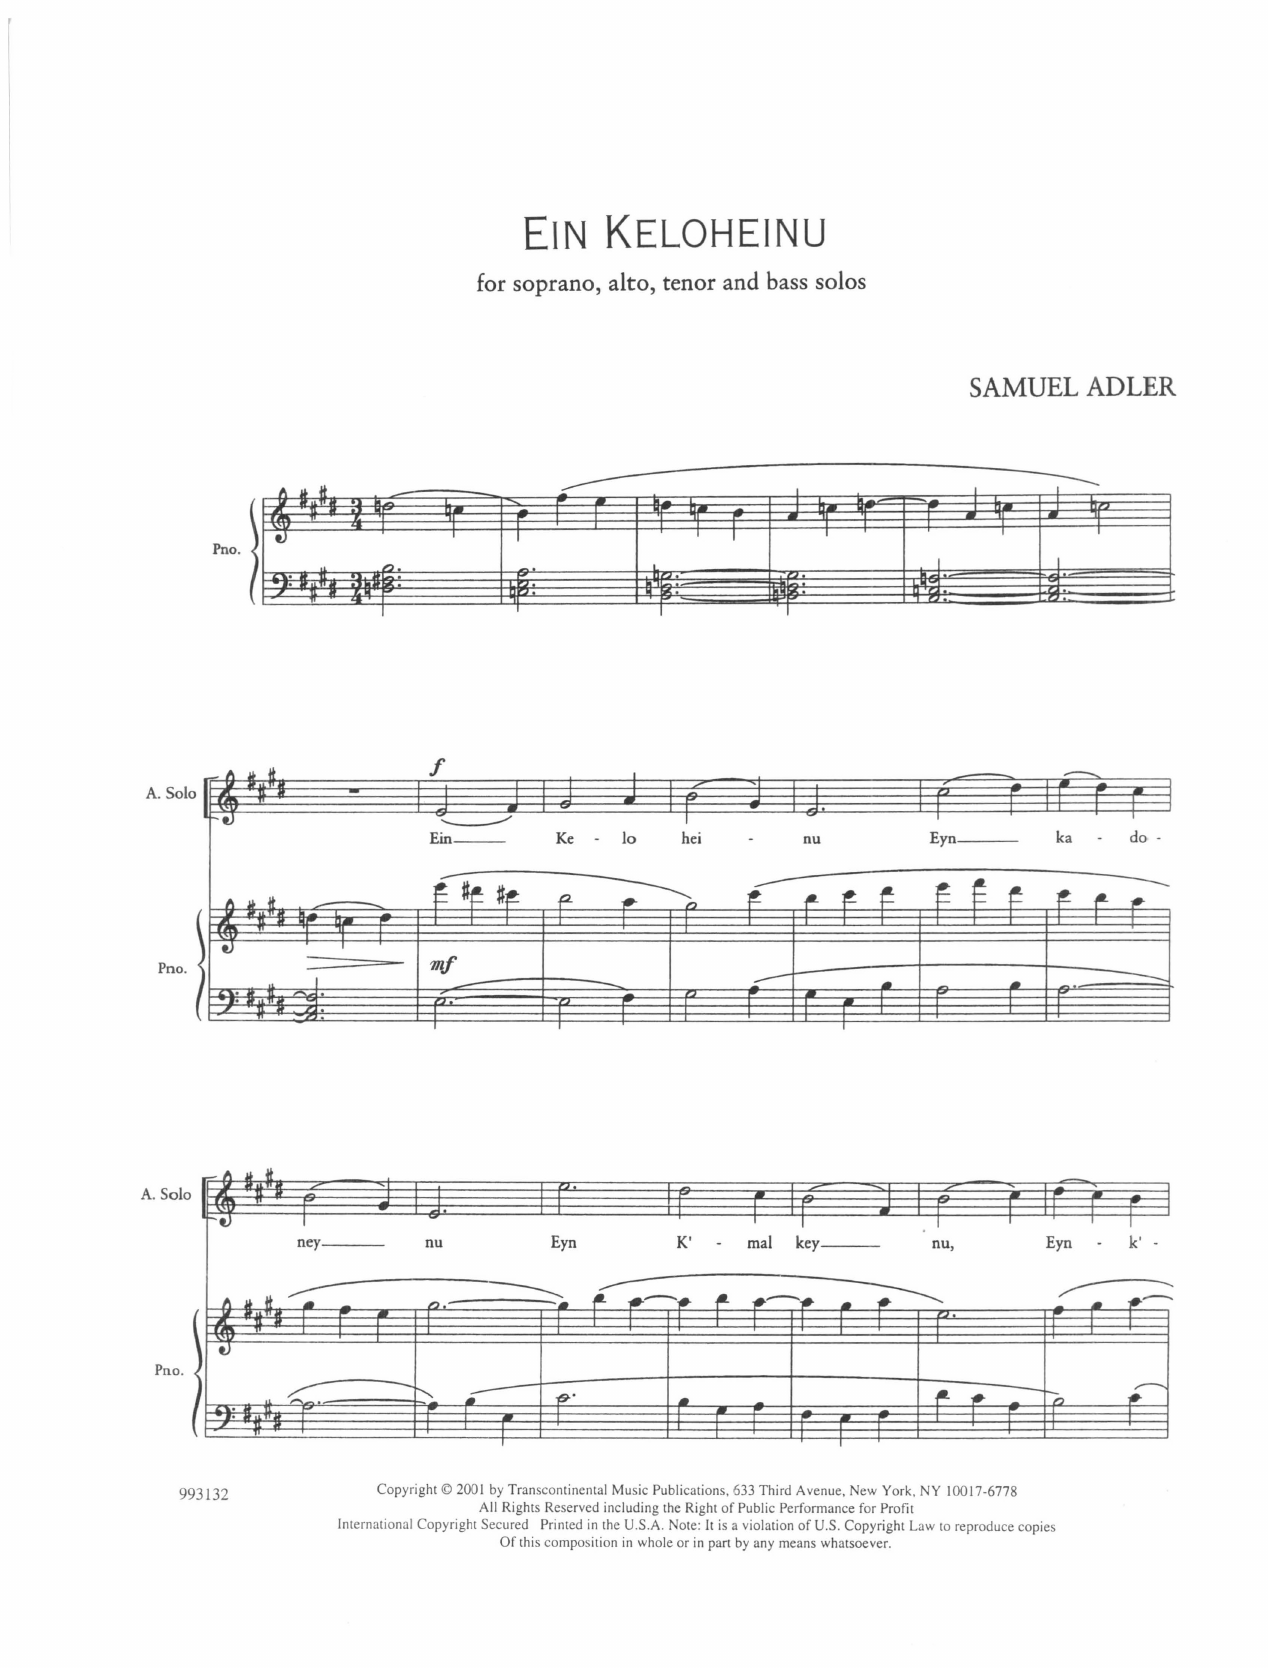 Download Samuel Adler Five Sephardic Choruses: Ein Keloheinu Sheet Music and learn how to play SATB Choir PDF digital score in minutes